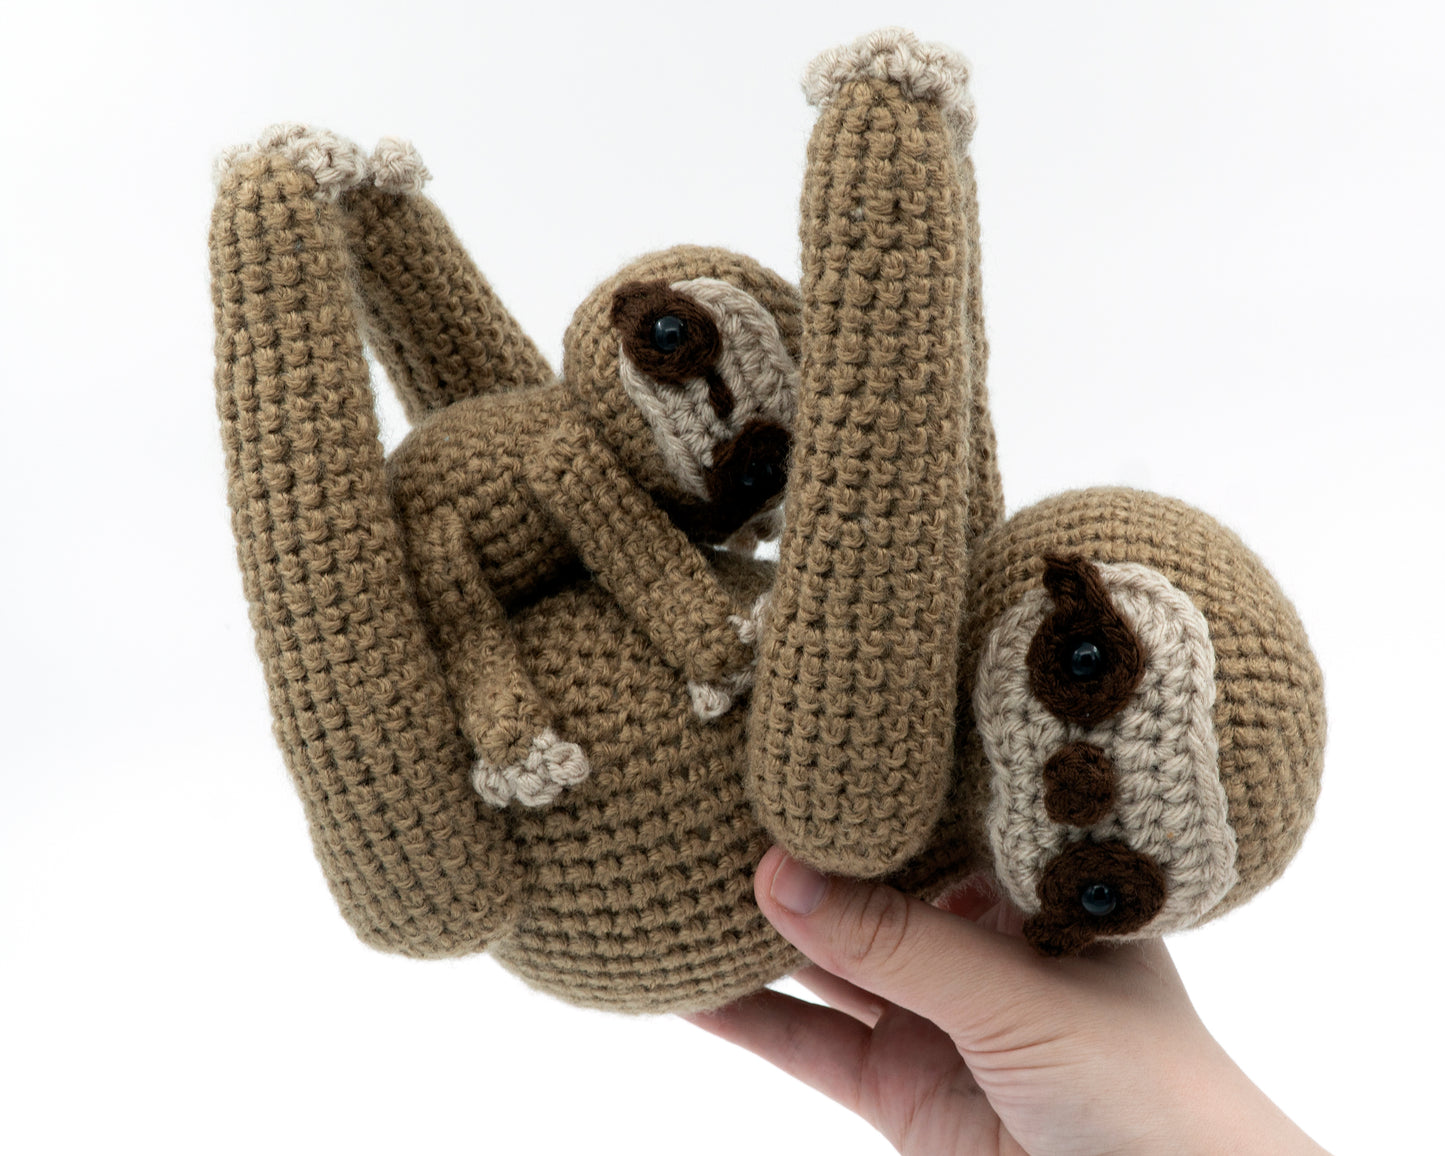 amigurumi crochet sloth pattern in hand for size comparison